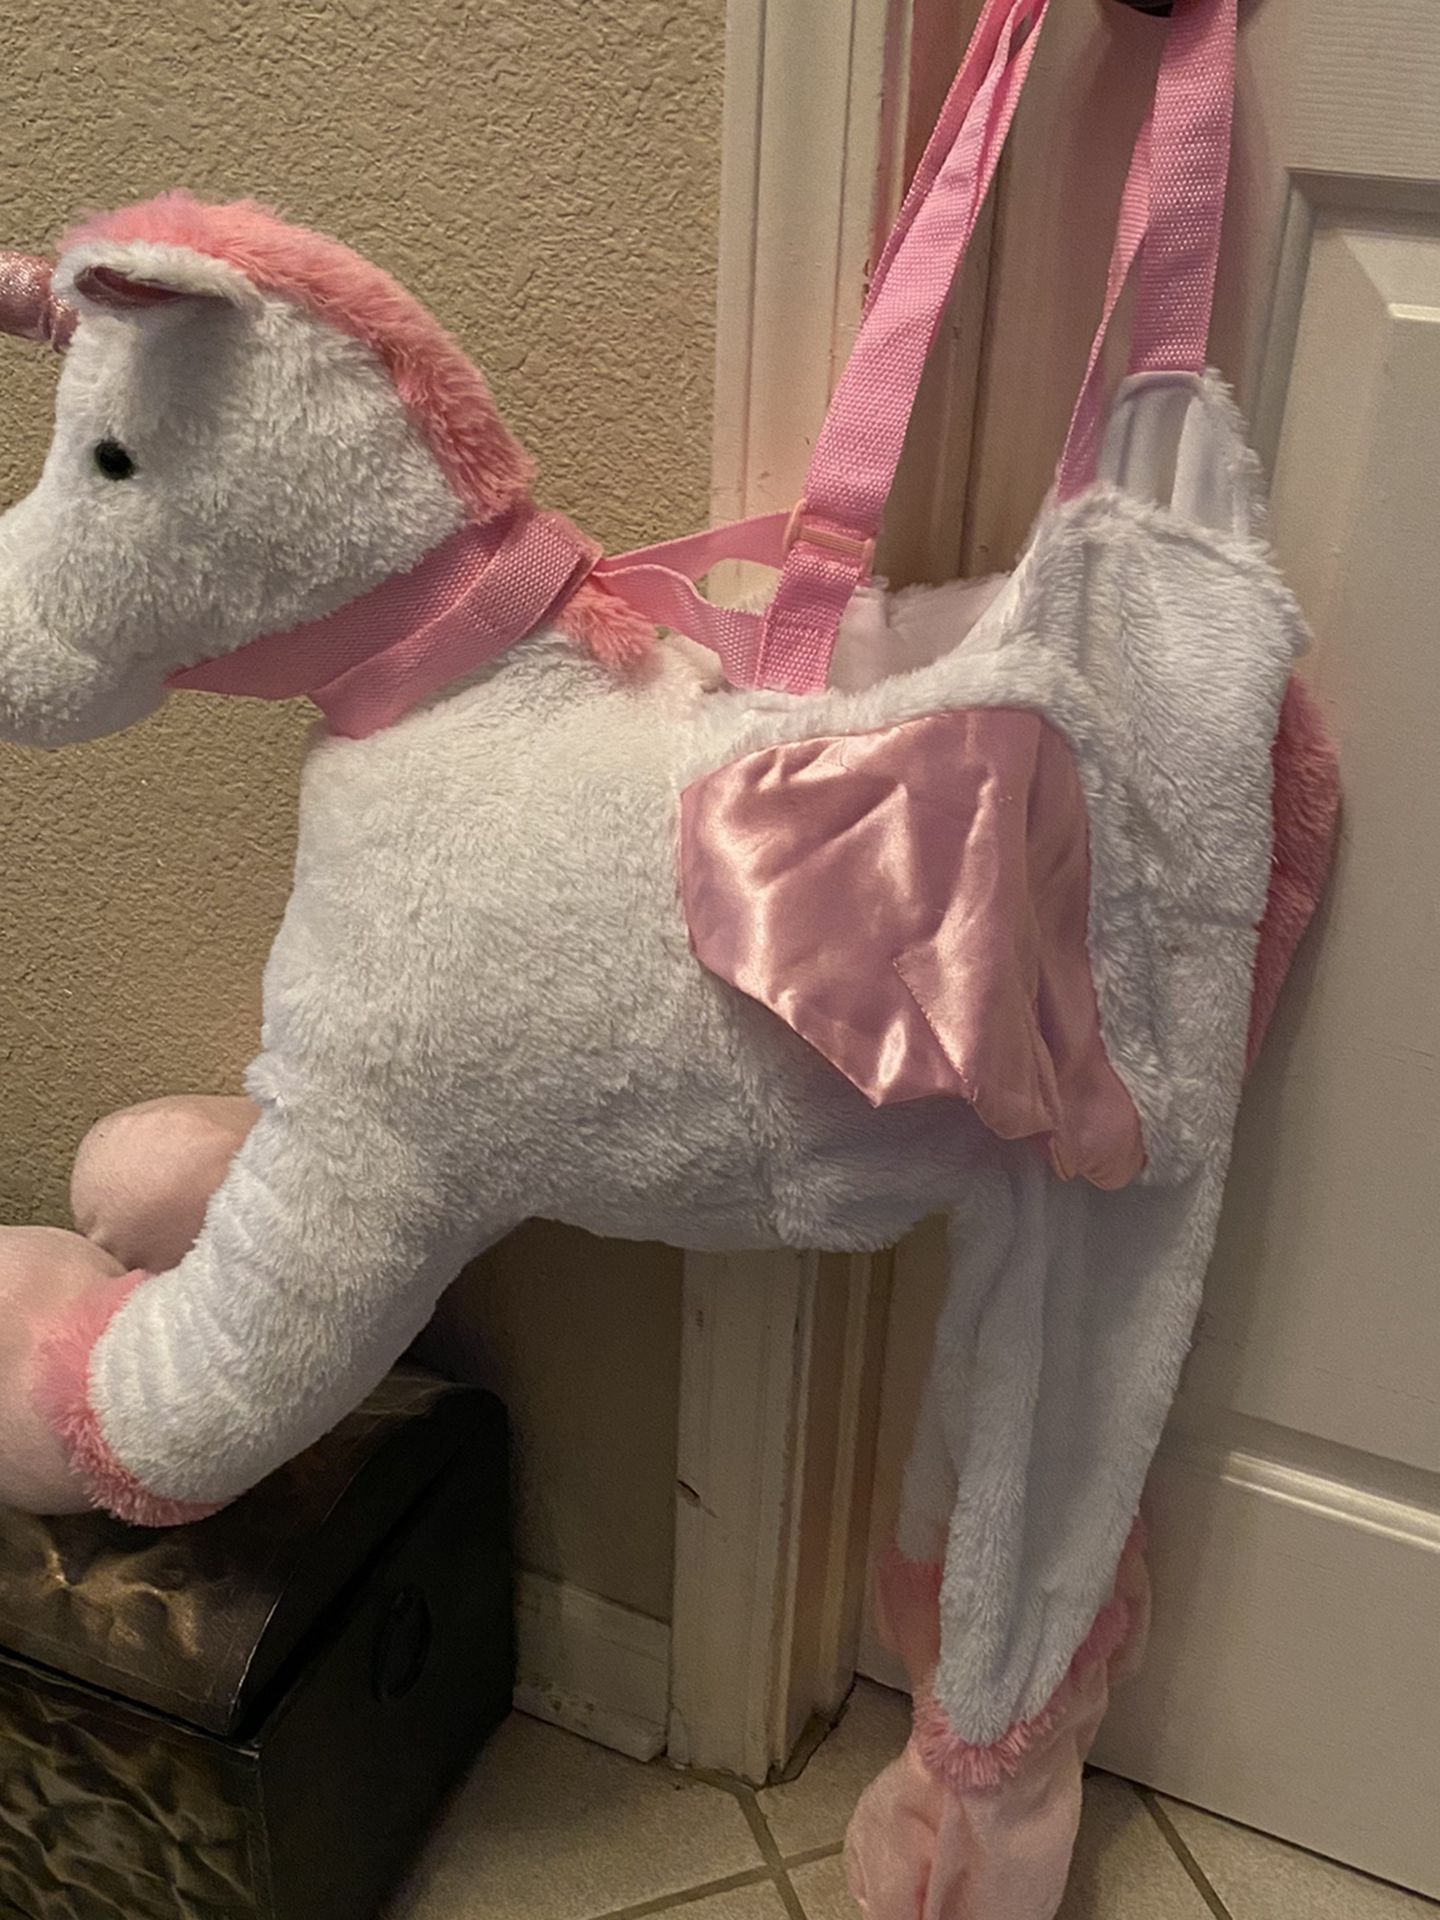 Unicorn Ride On Costume